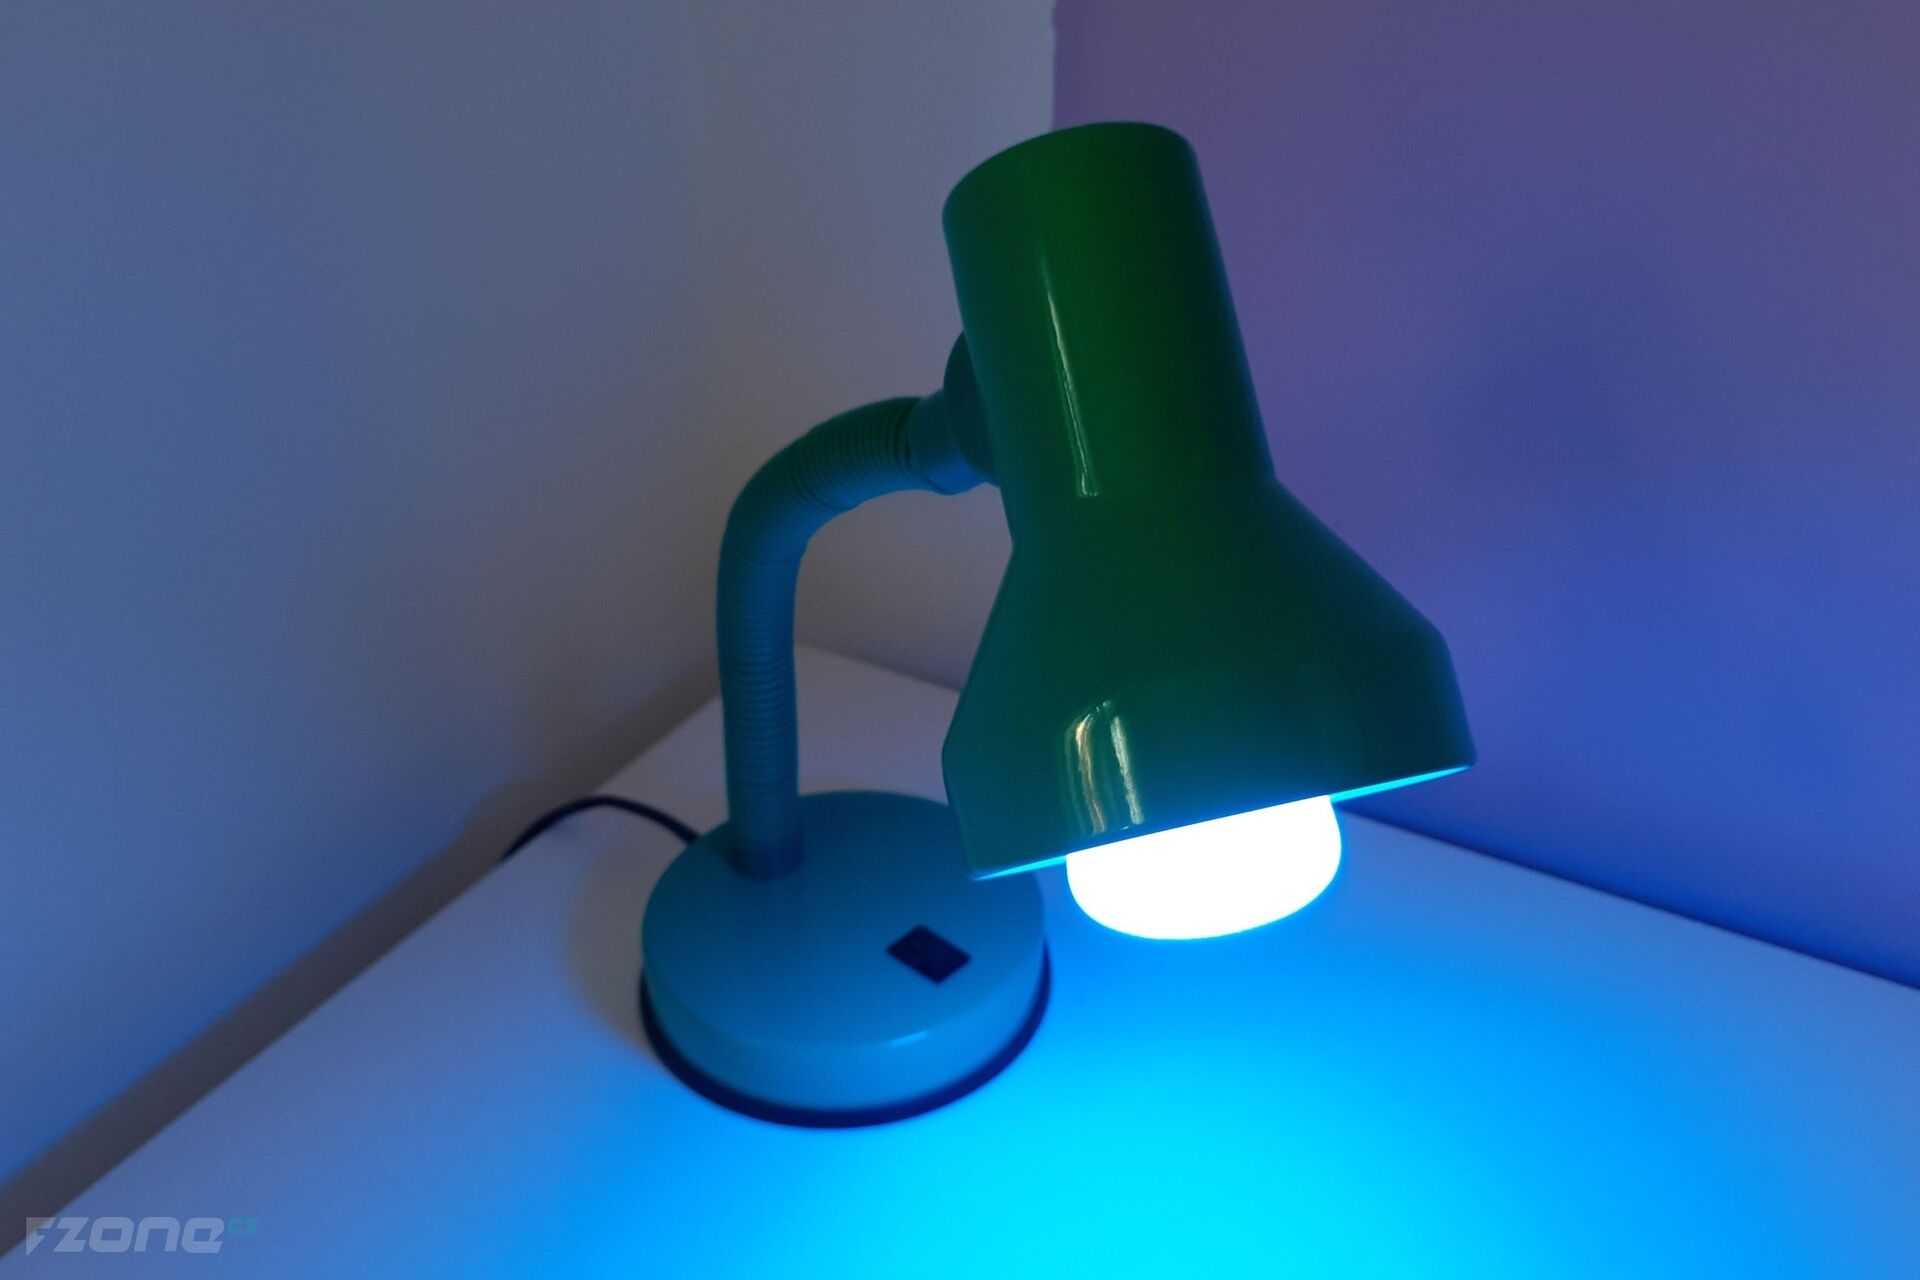 Realme LED Smart Bulb